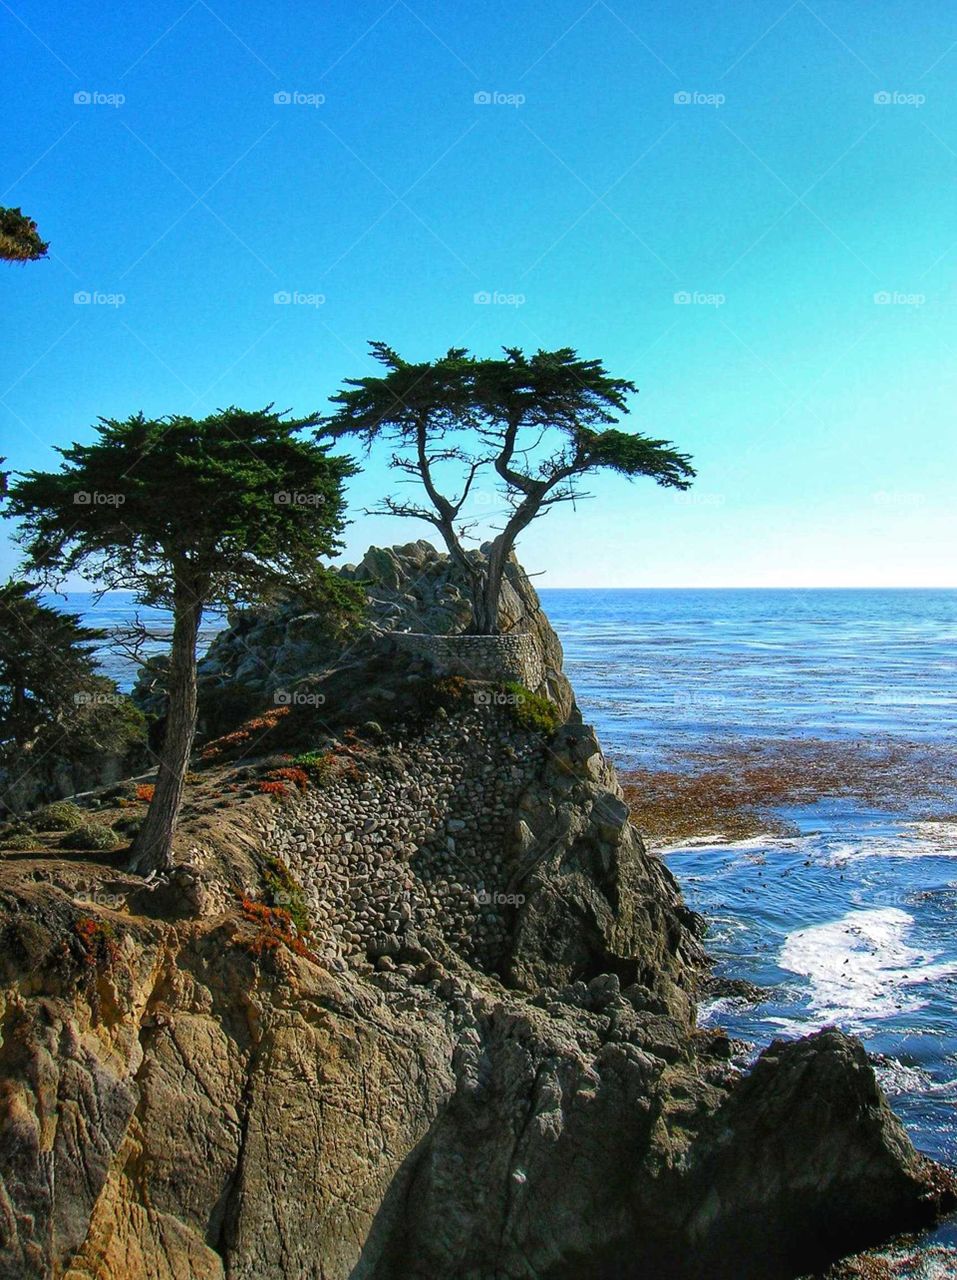 Breathtaking beauty of the Lone Cypress on Carmel's 17 Mile Drive. California